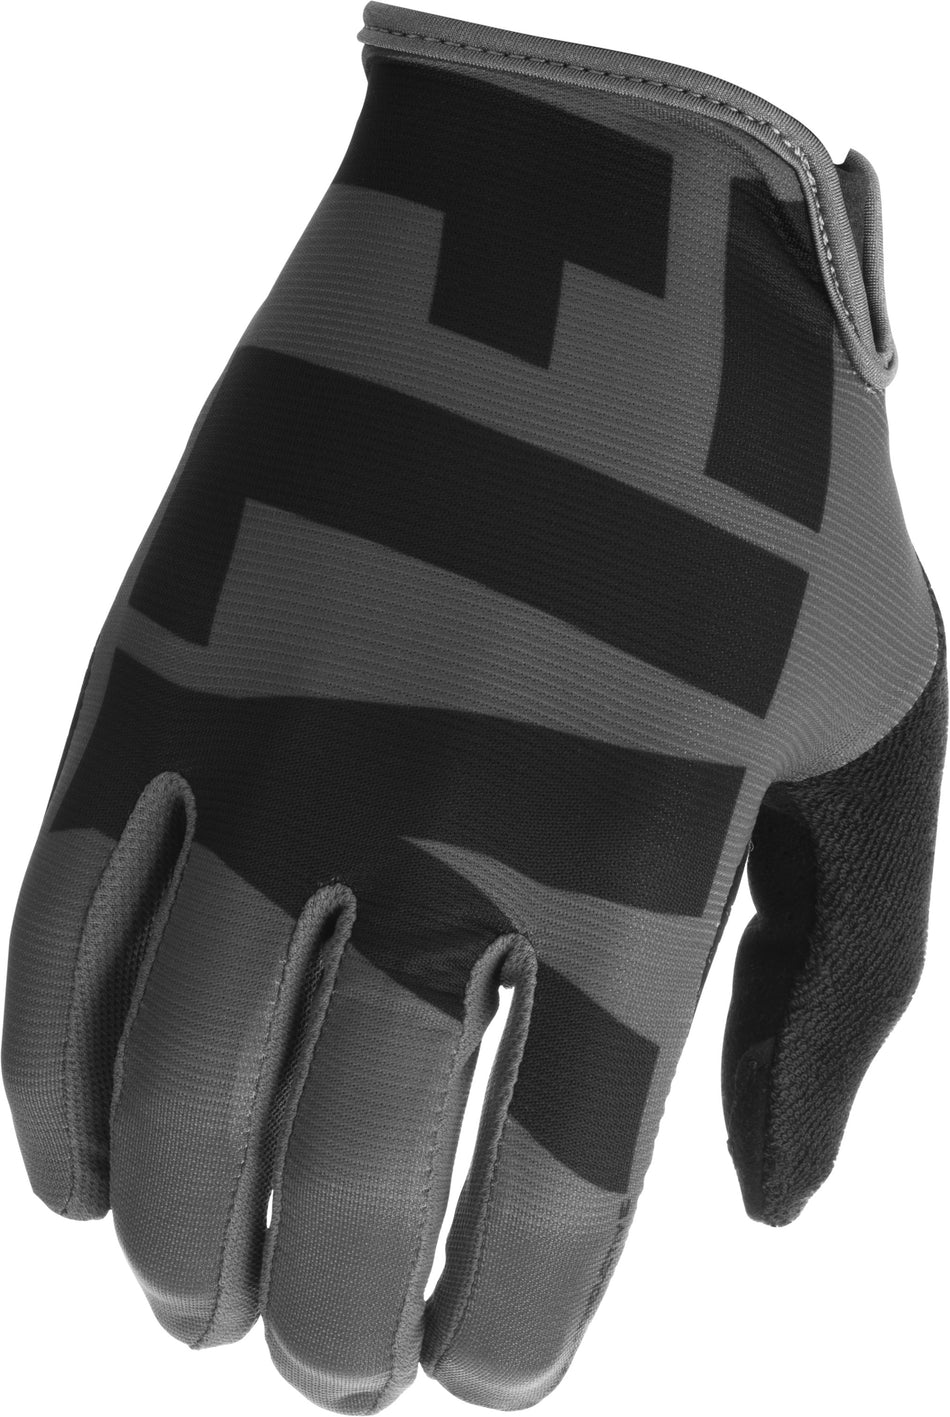 FLY RACING Media Gloves Charcoal Grey/Black Sz 11 350-10011